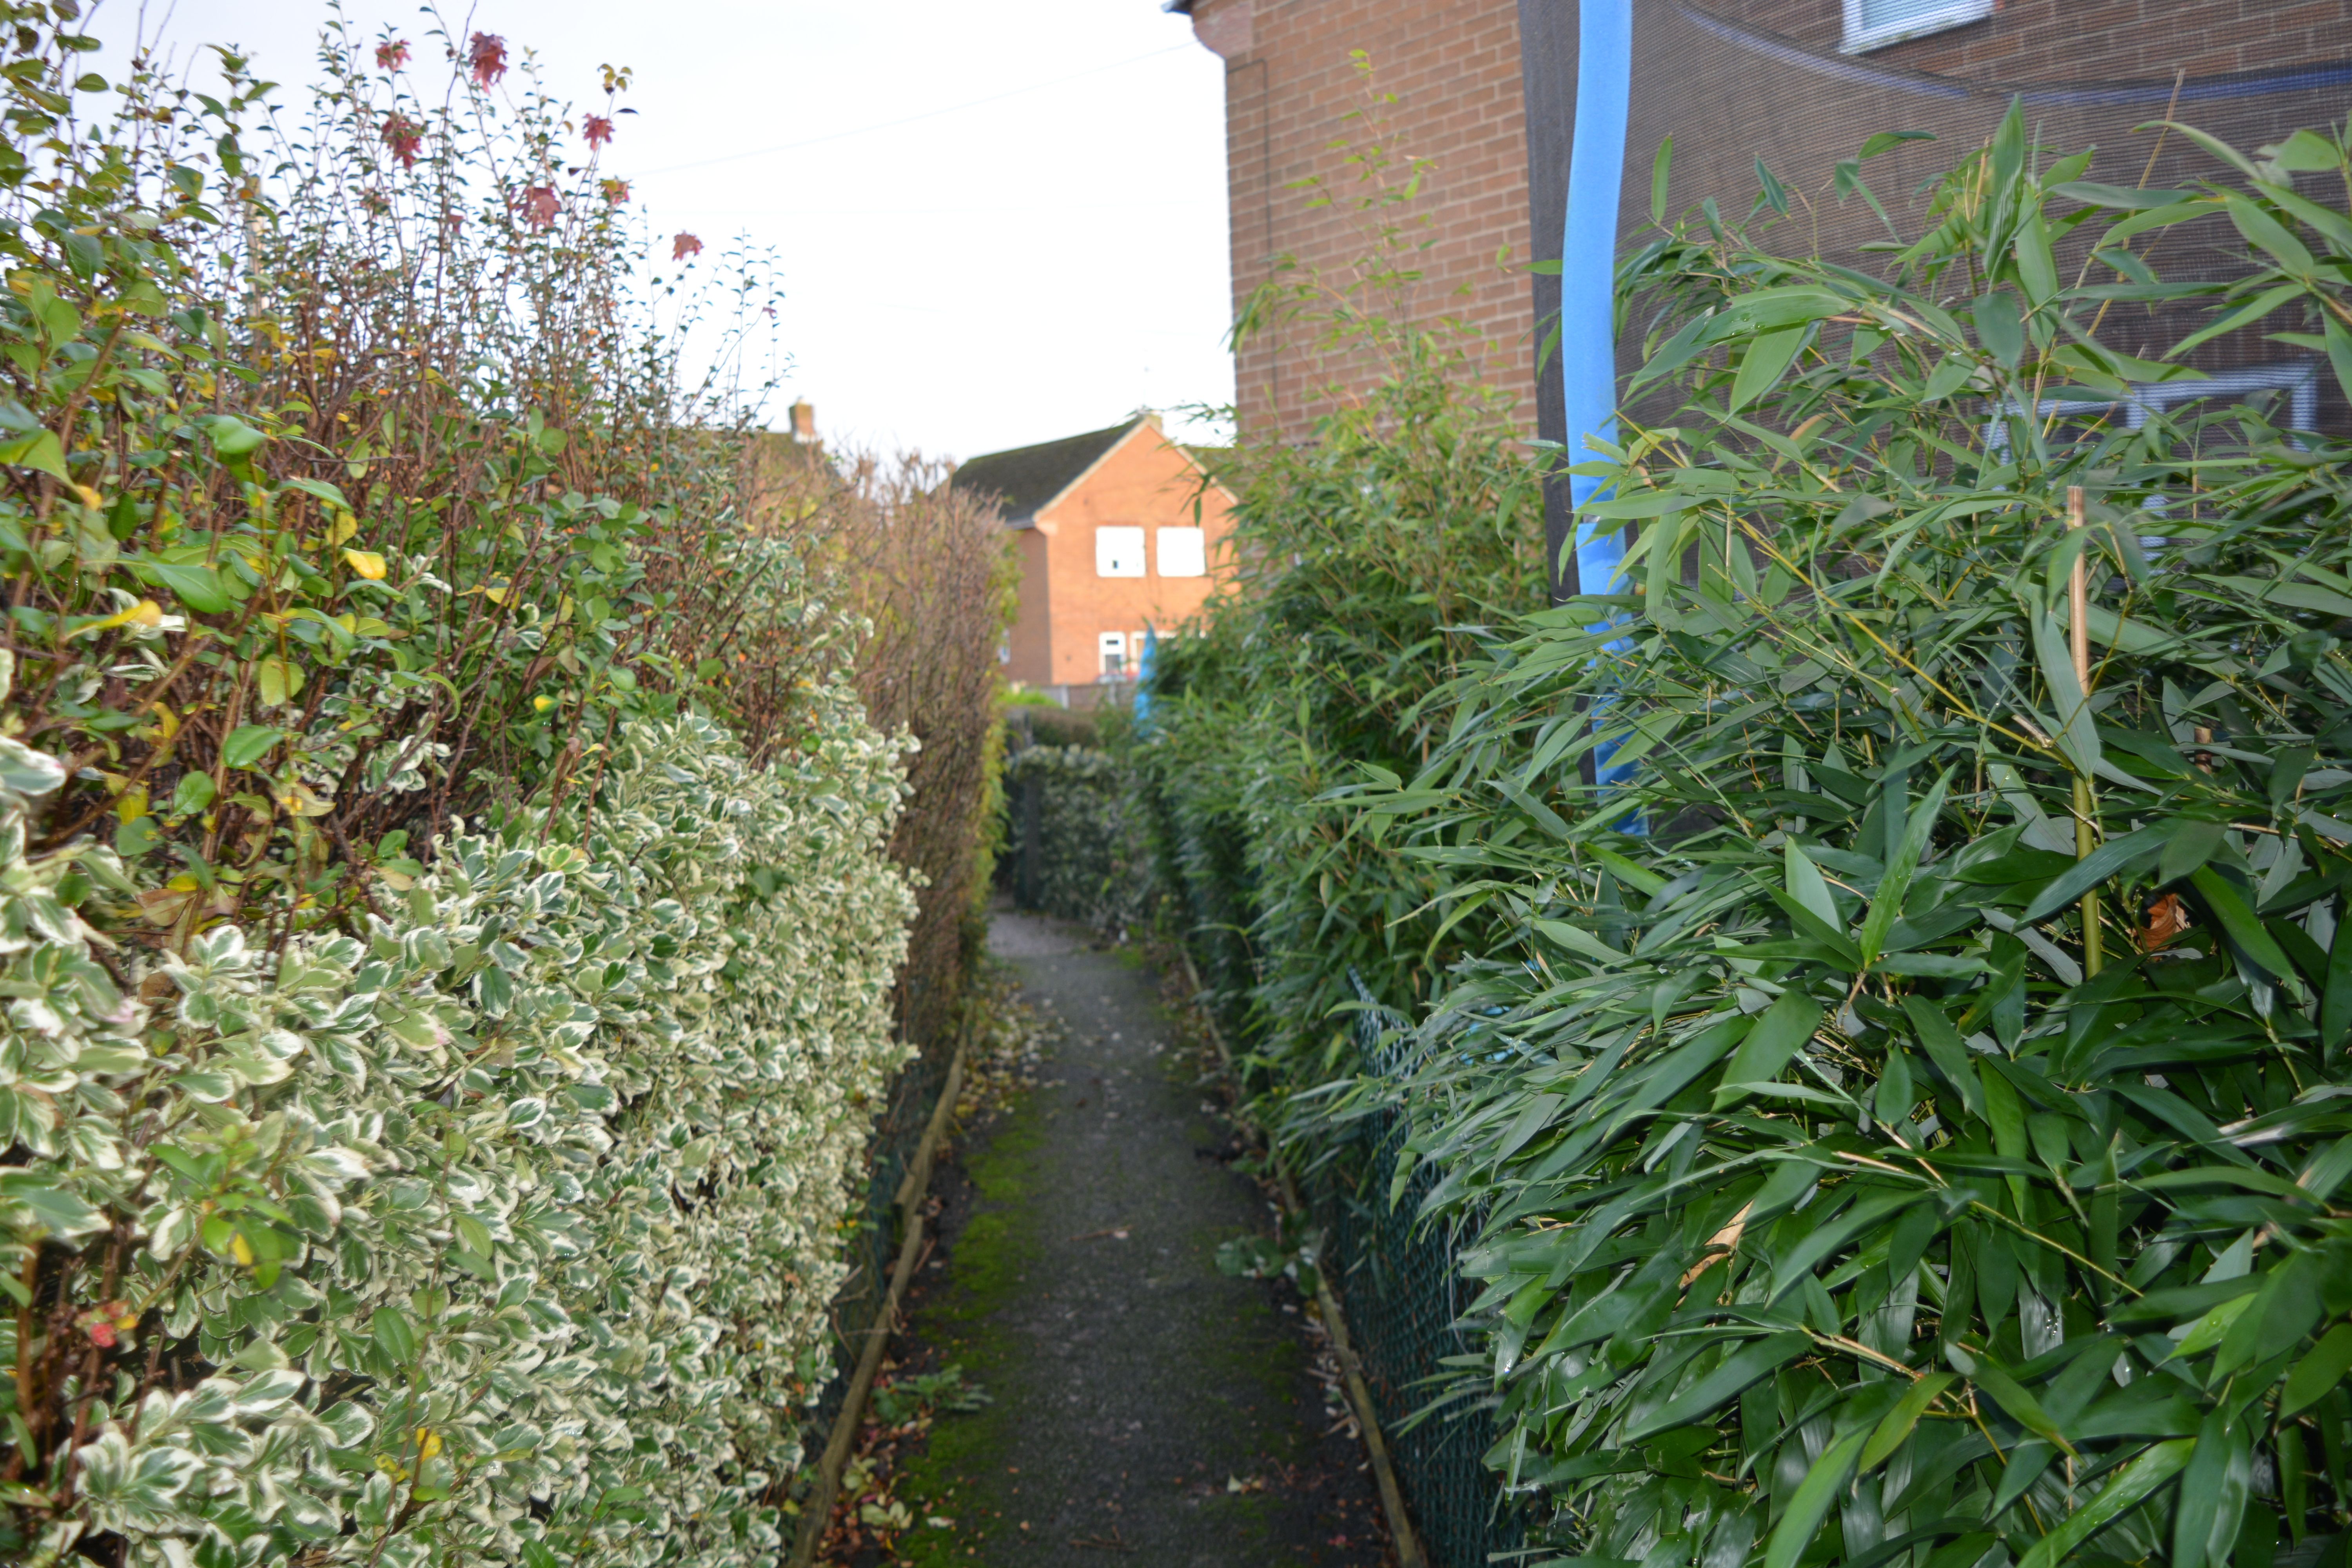 overgrowing foliage towards Marsden Close